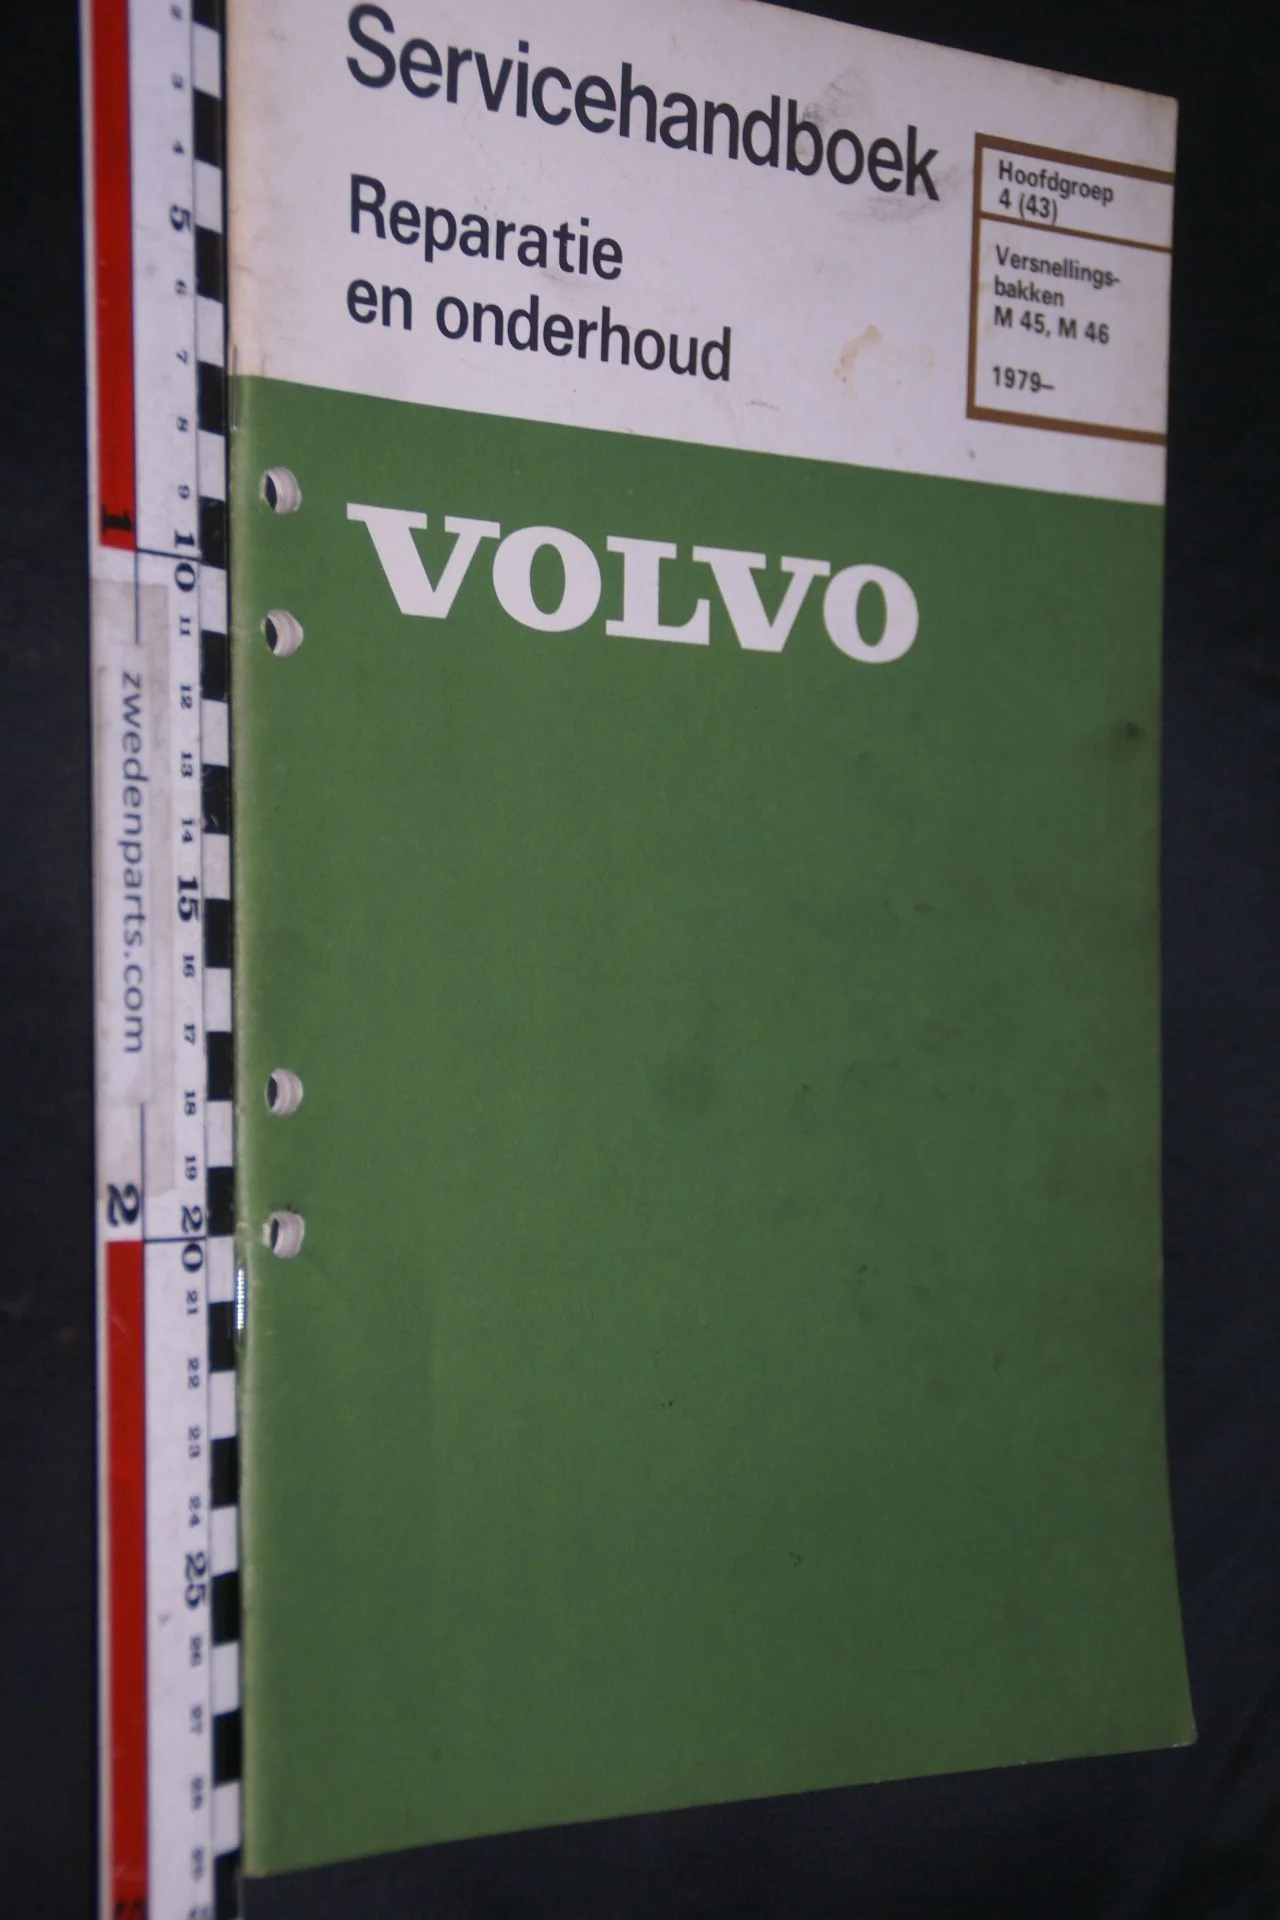 DSC07288 1980 origineel Volvo 300 servicehandboek  4(43) versnellingsbak M45 M46 1 van 800 TP 30195-1